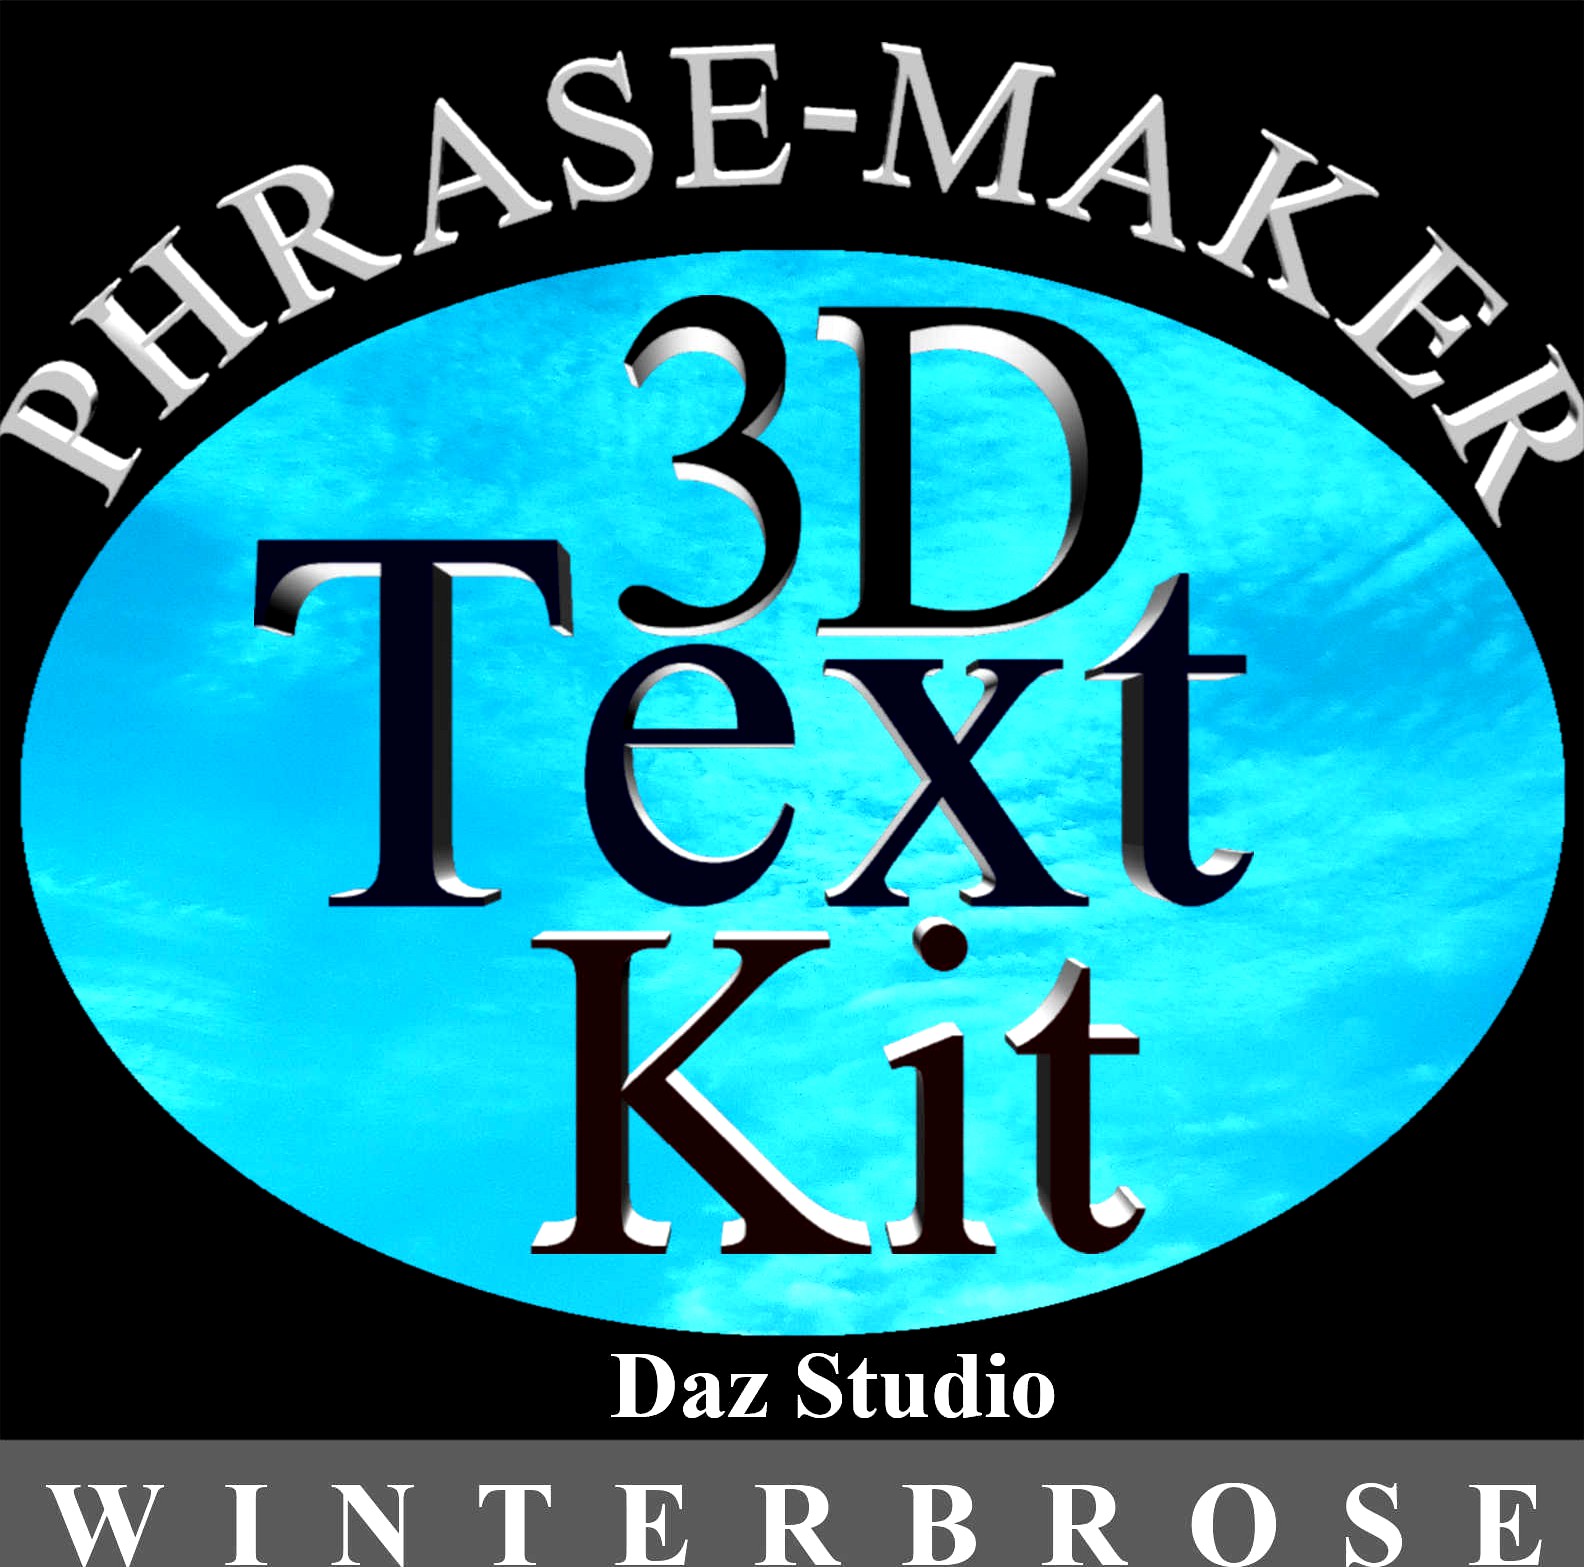 PHRASE-MAKER, 3D Writing and Design Scripts for Daz Studio with Bonus 3D Font